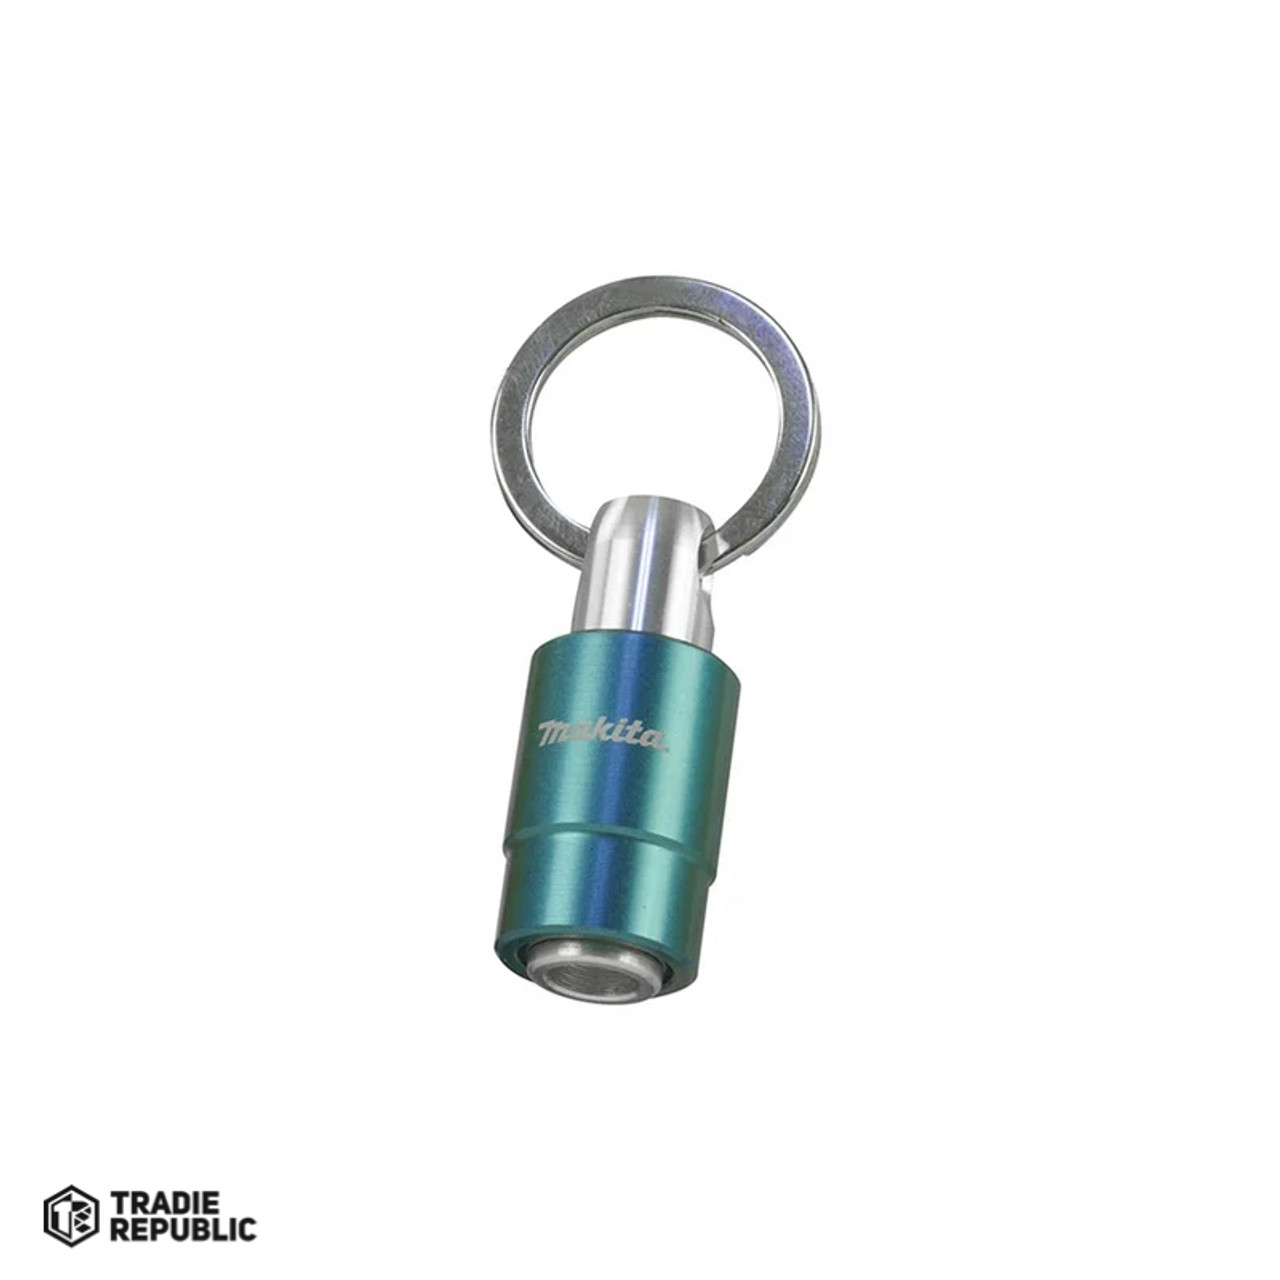 B-54411 Makita Screwdriver Bit Catcher - Retainer Key Ring